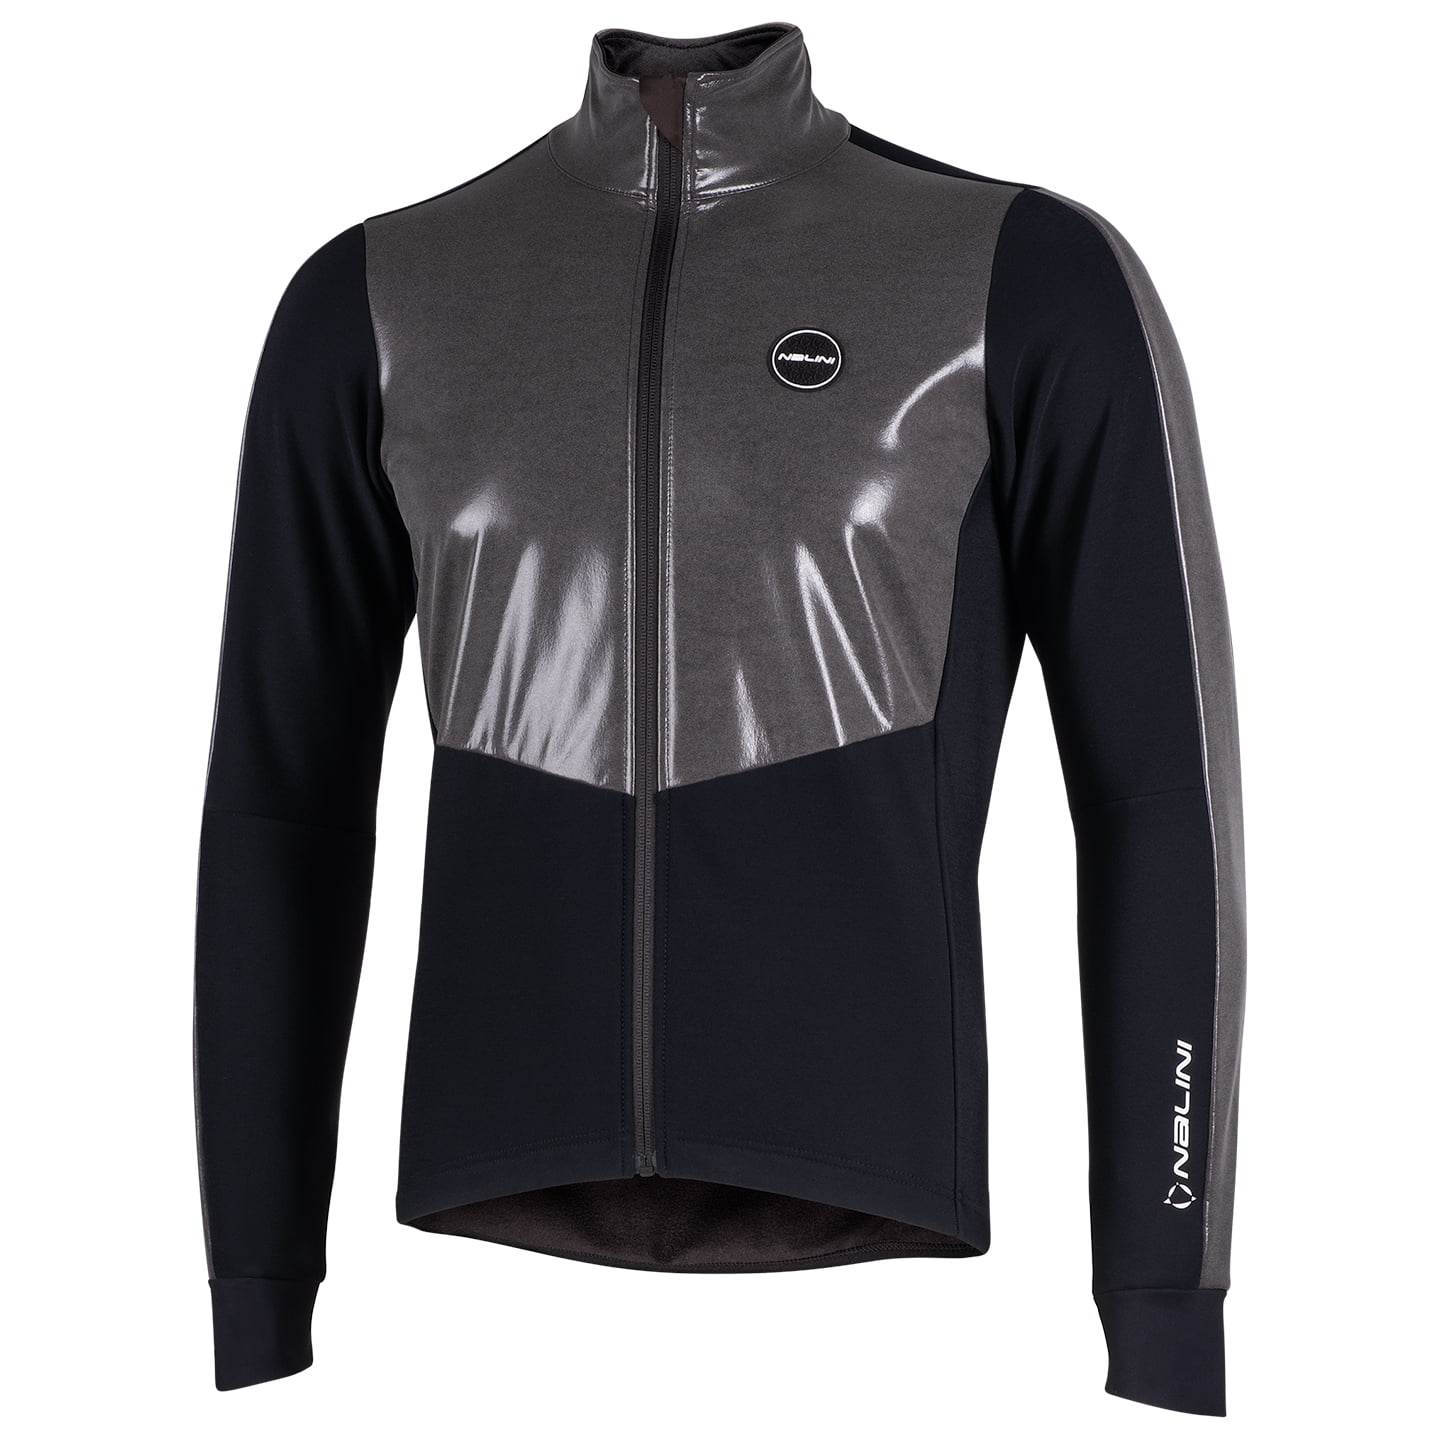 NALINI New Warm Reflex winter jacket Thermal Jacket, for men, size M, Cycle jacket, Cycling clothing